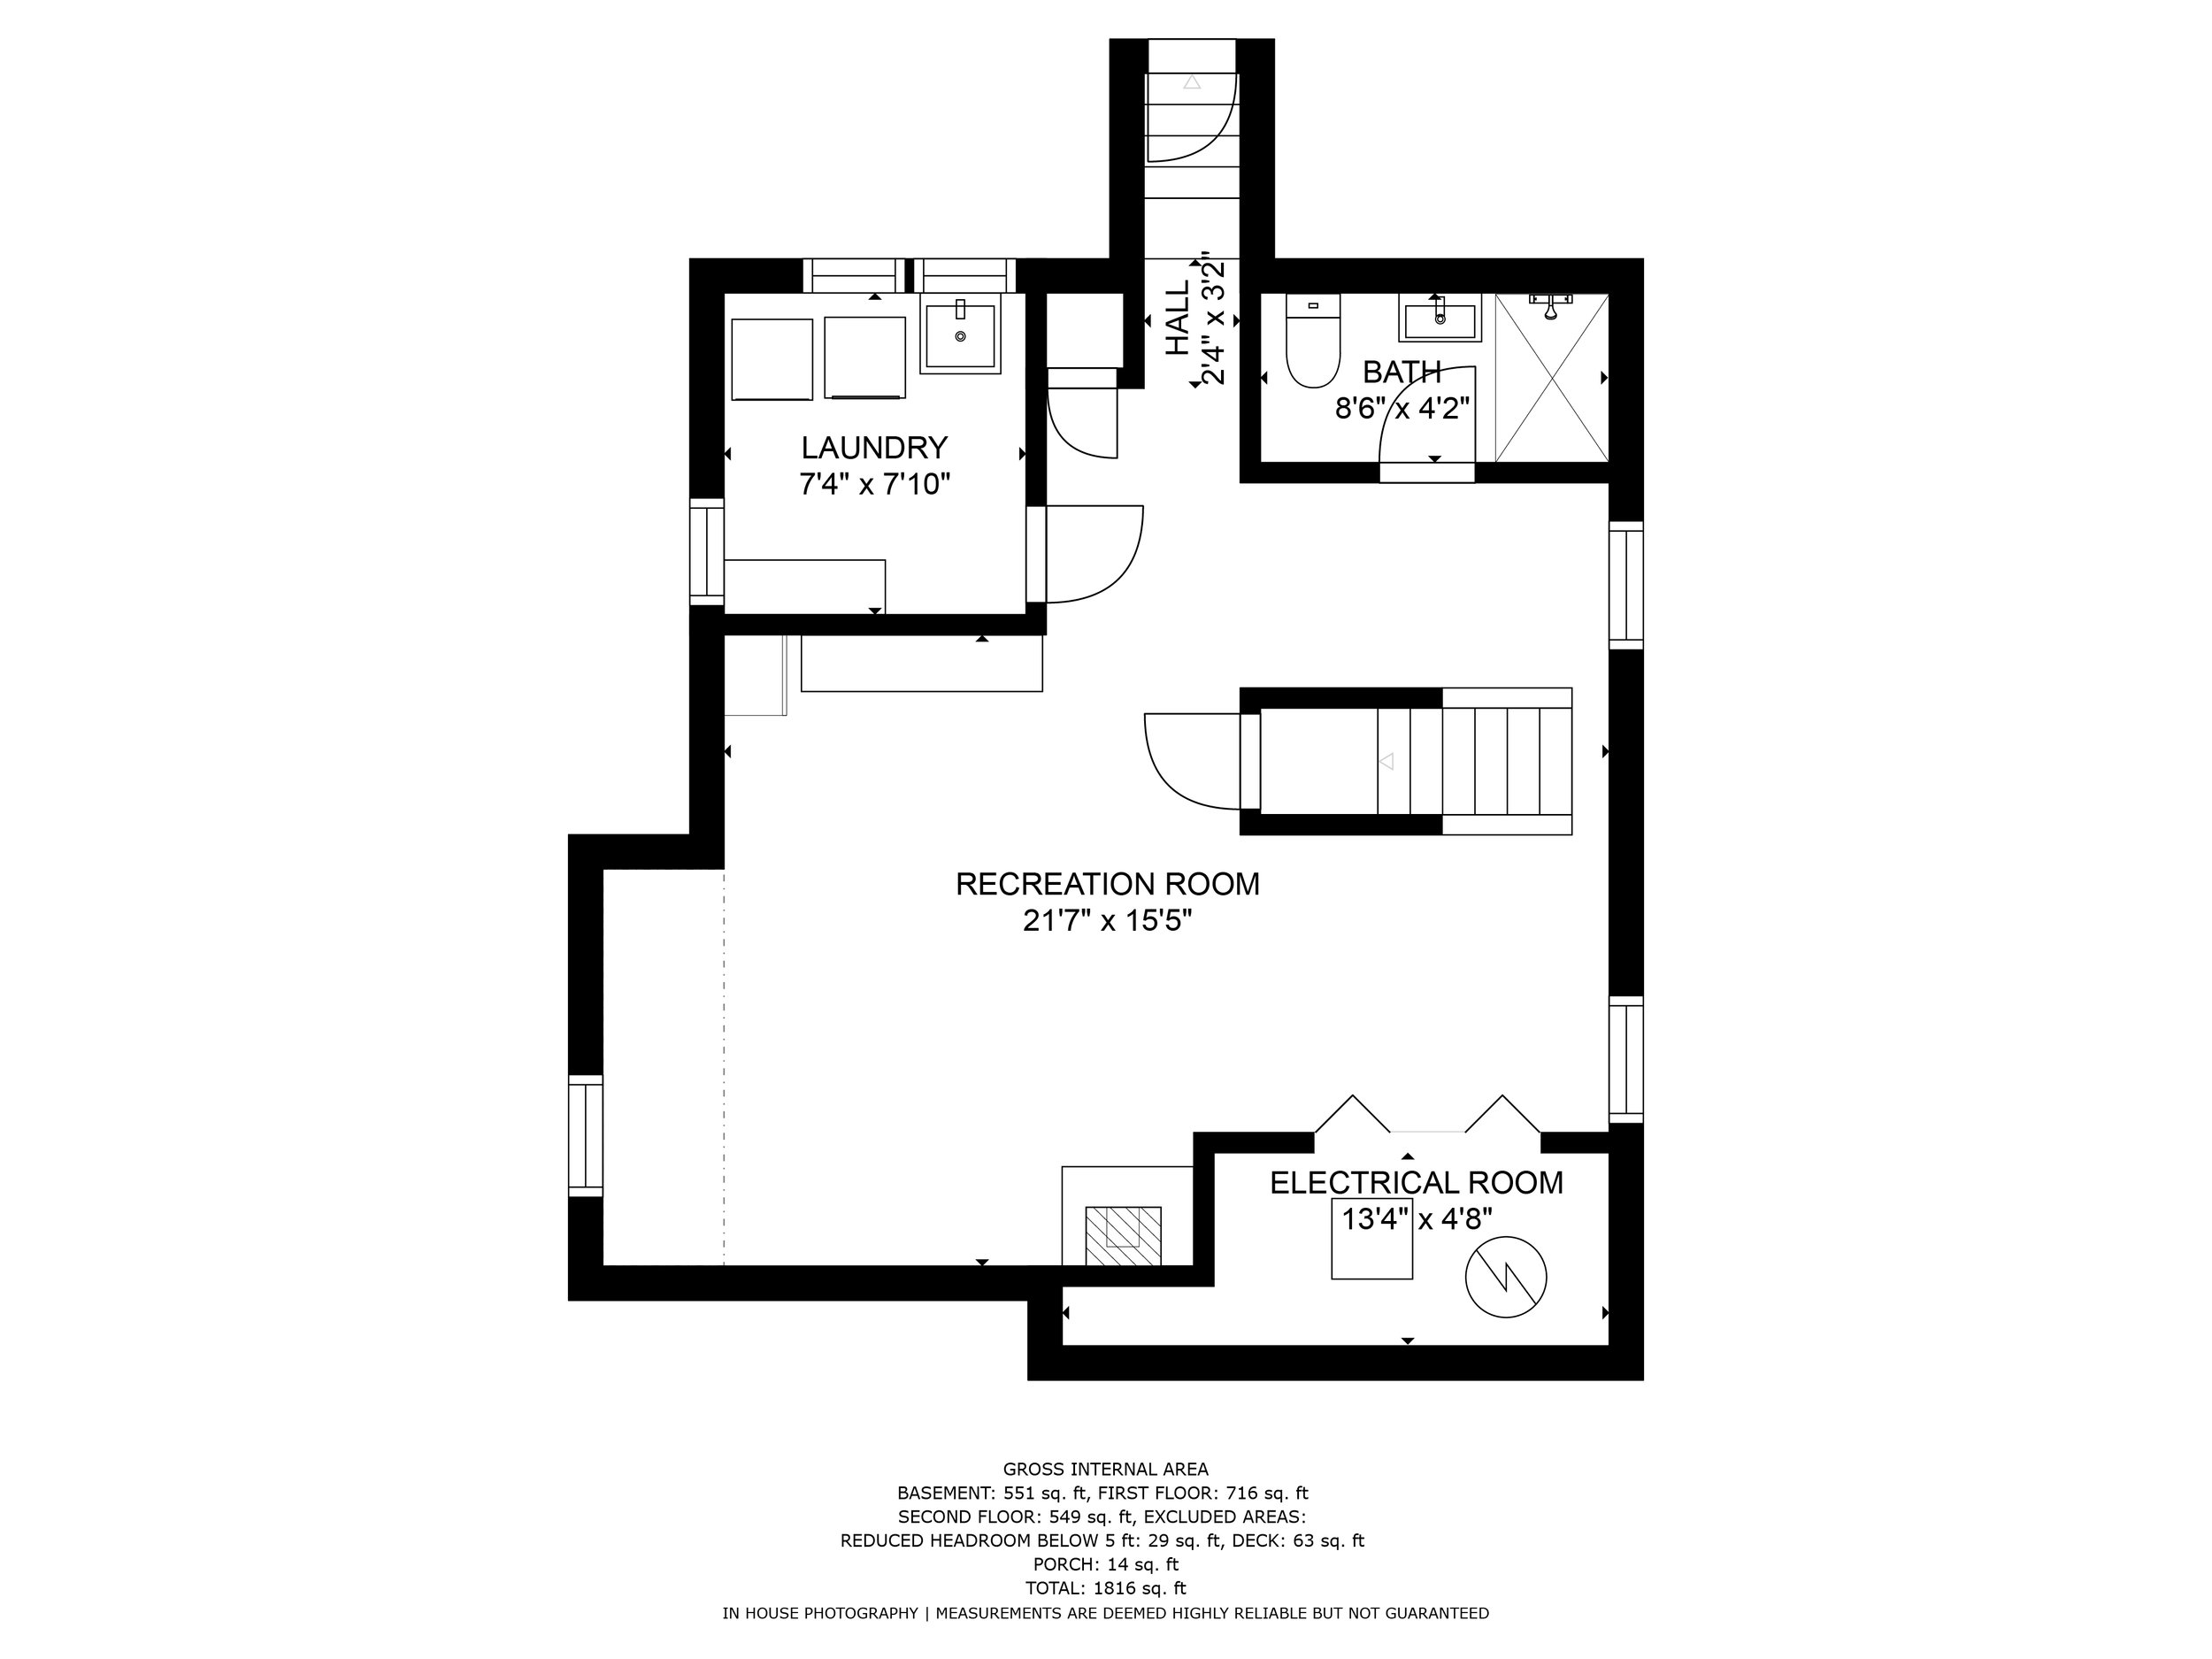 2-85 Midland floor plan basement.jpg